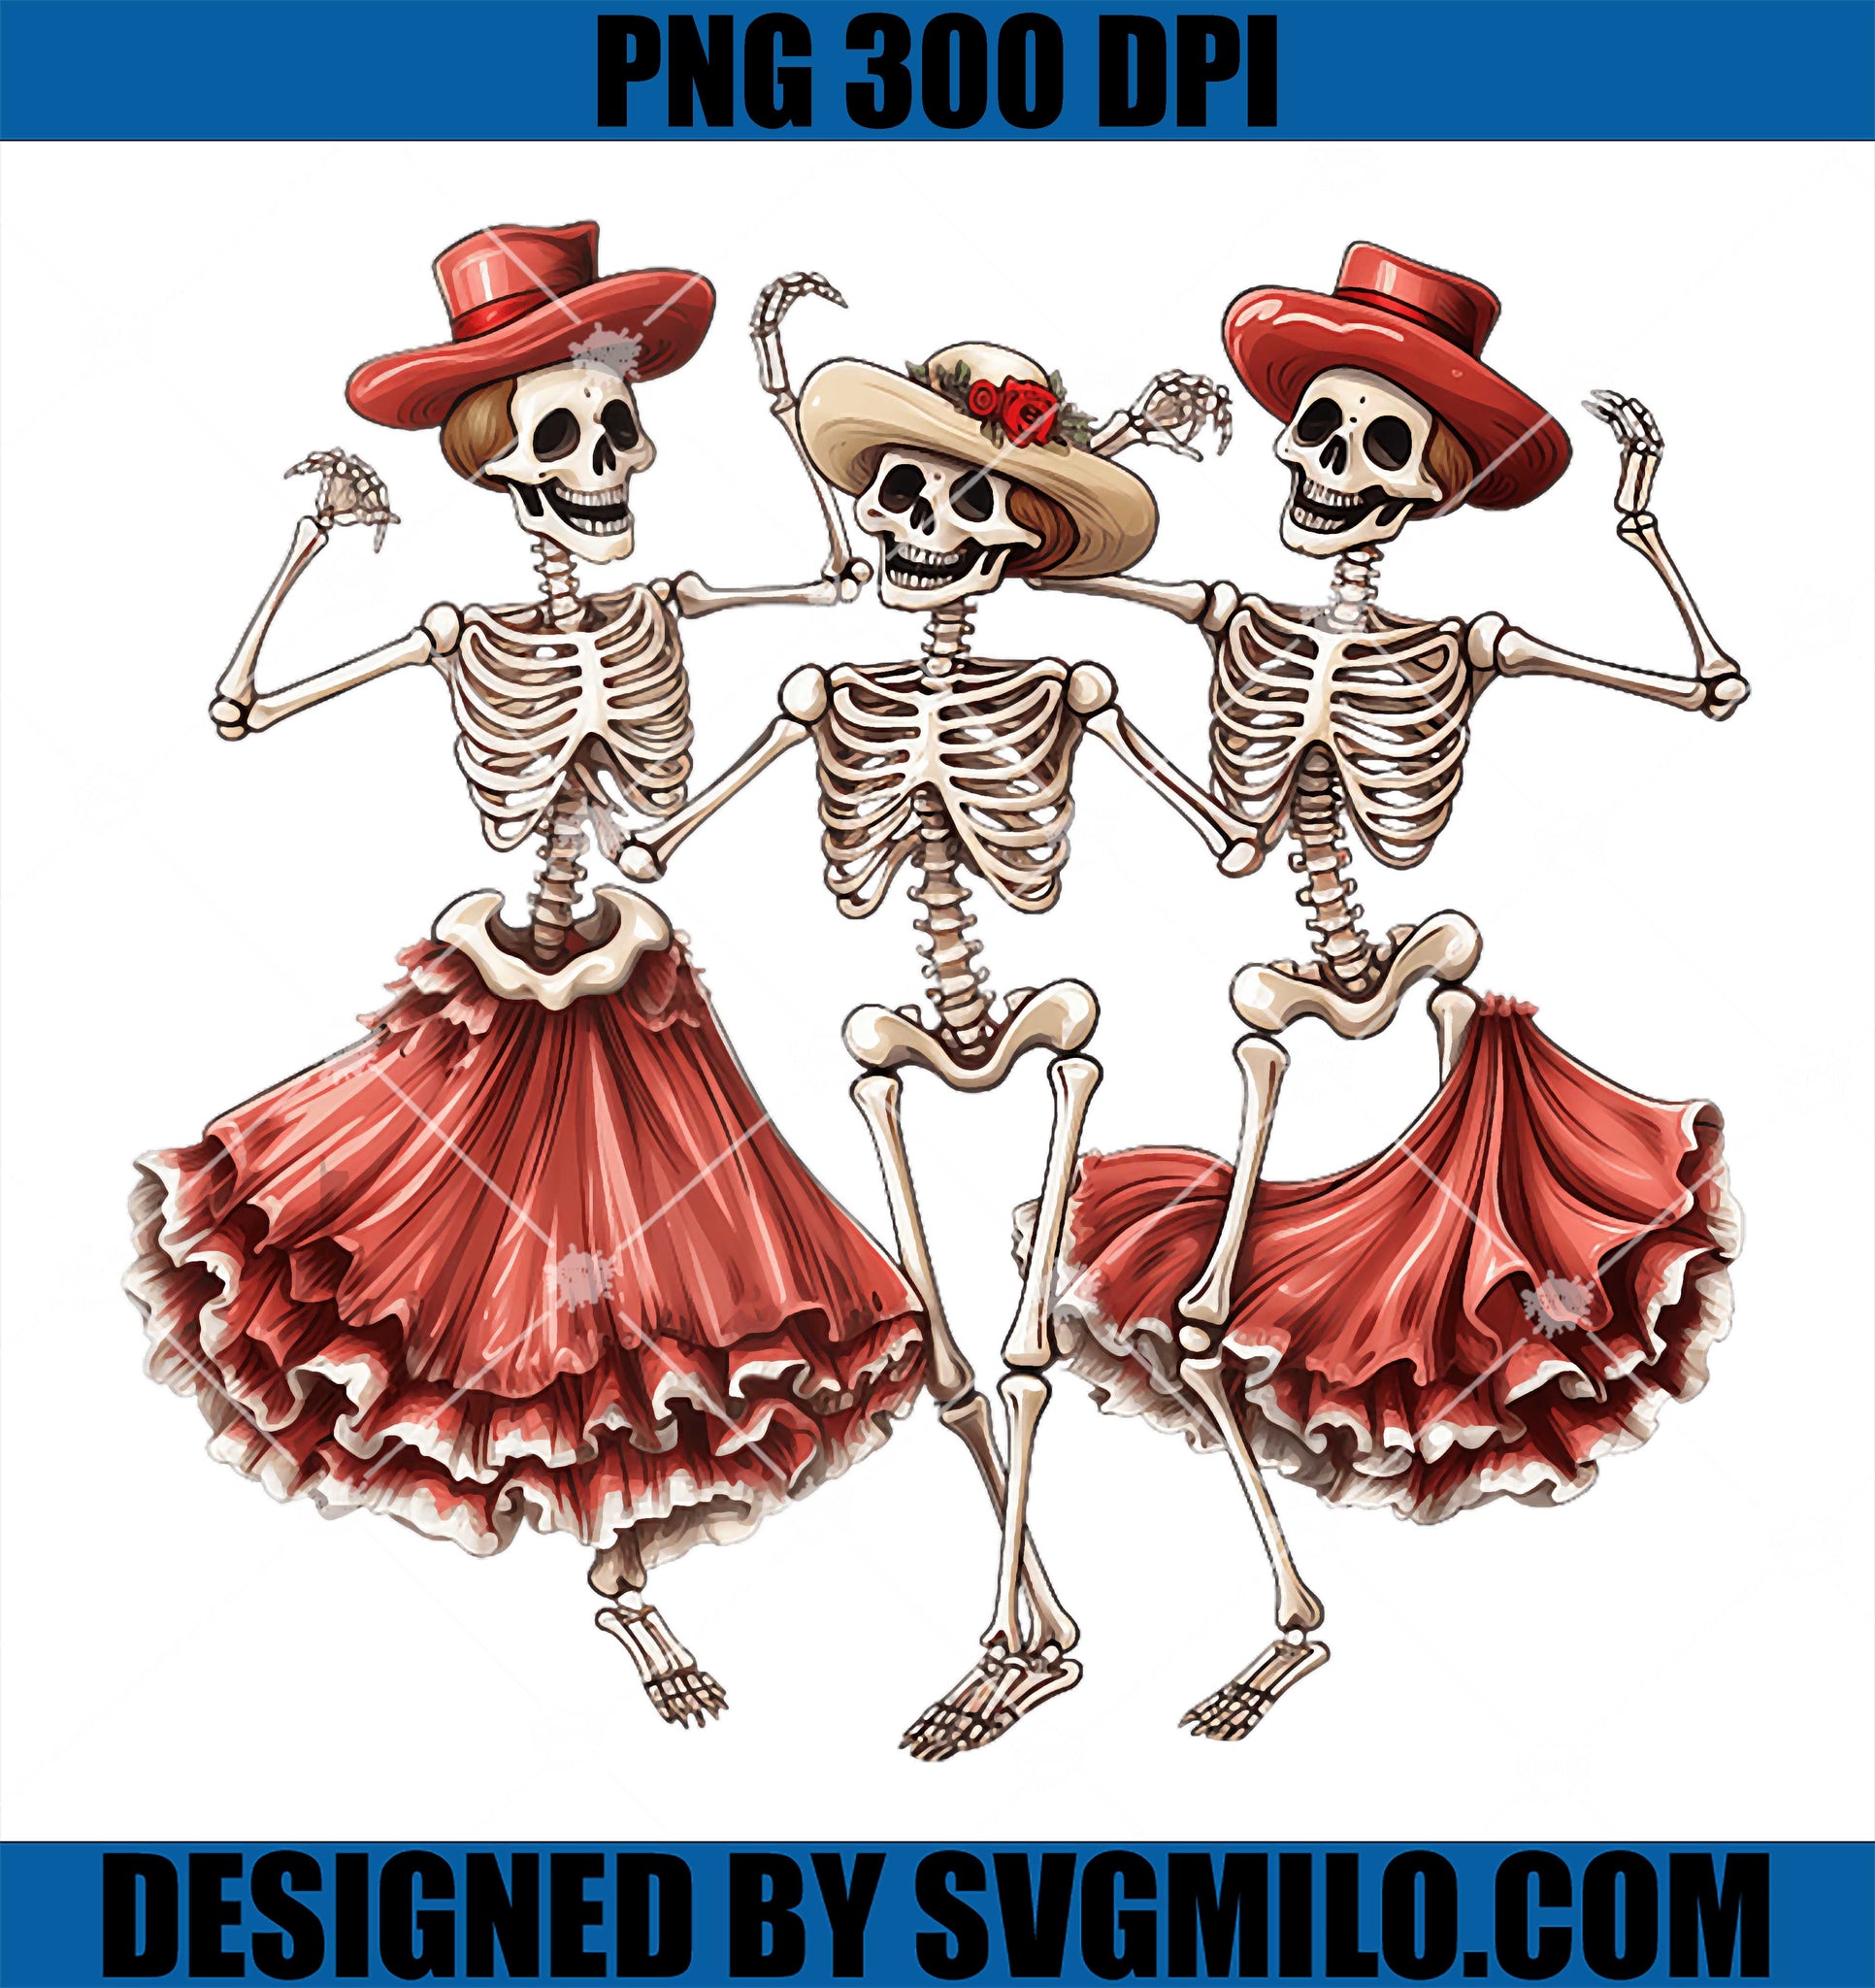 Skeleton Merry Christmas Dancing PNG, Skeletons Santa Claus PNG